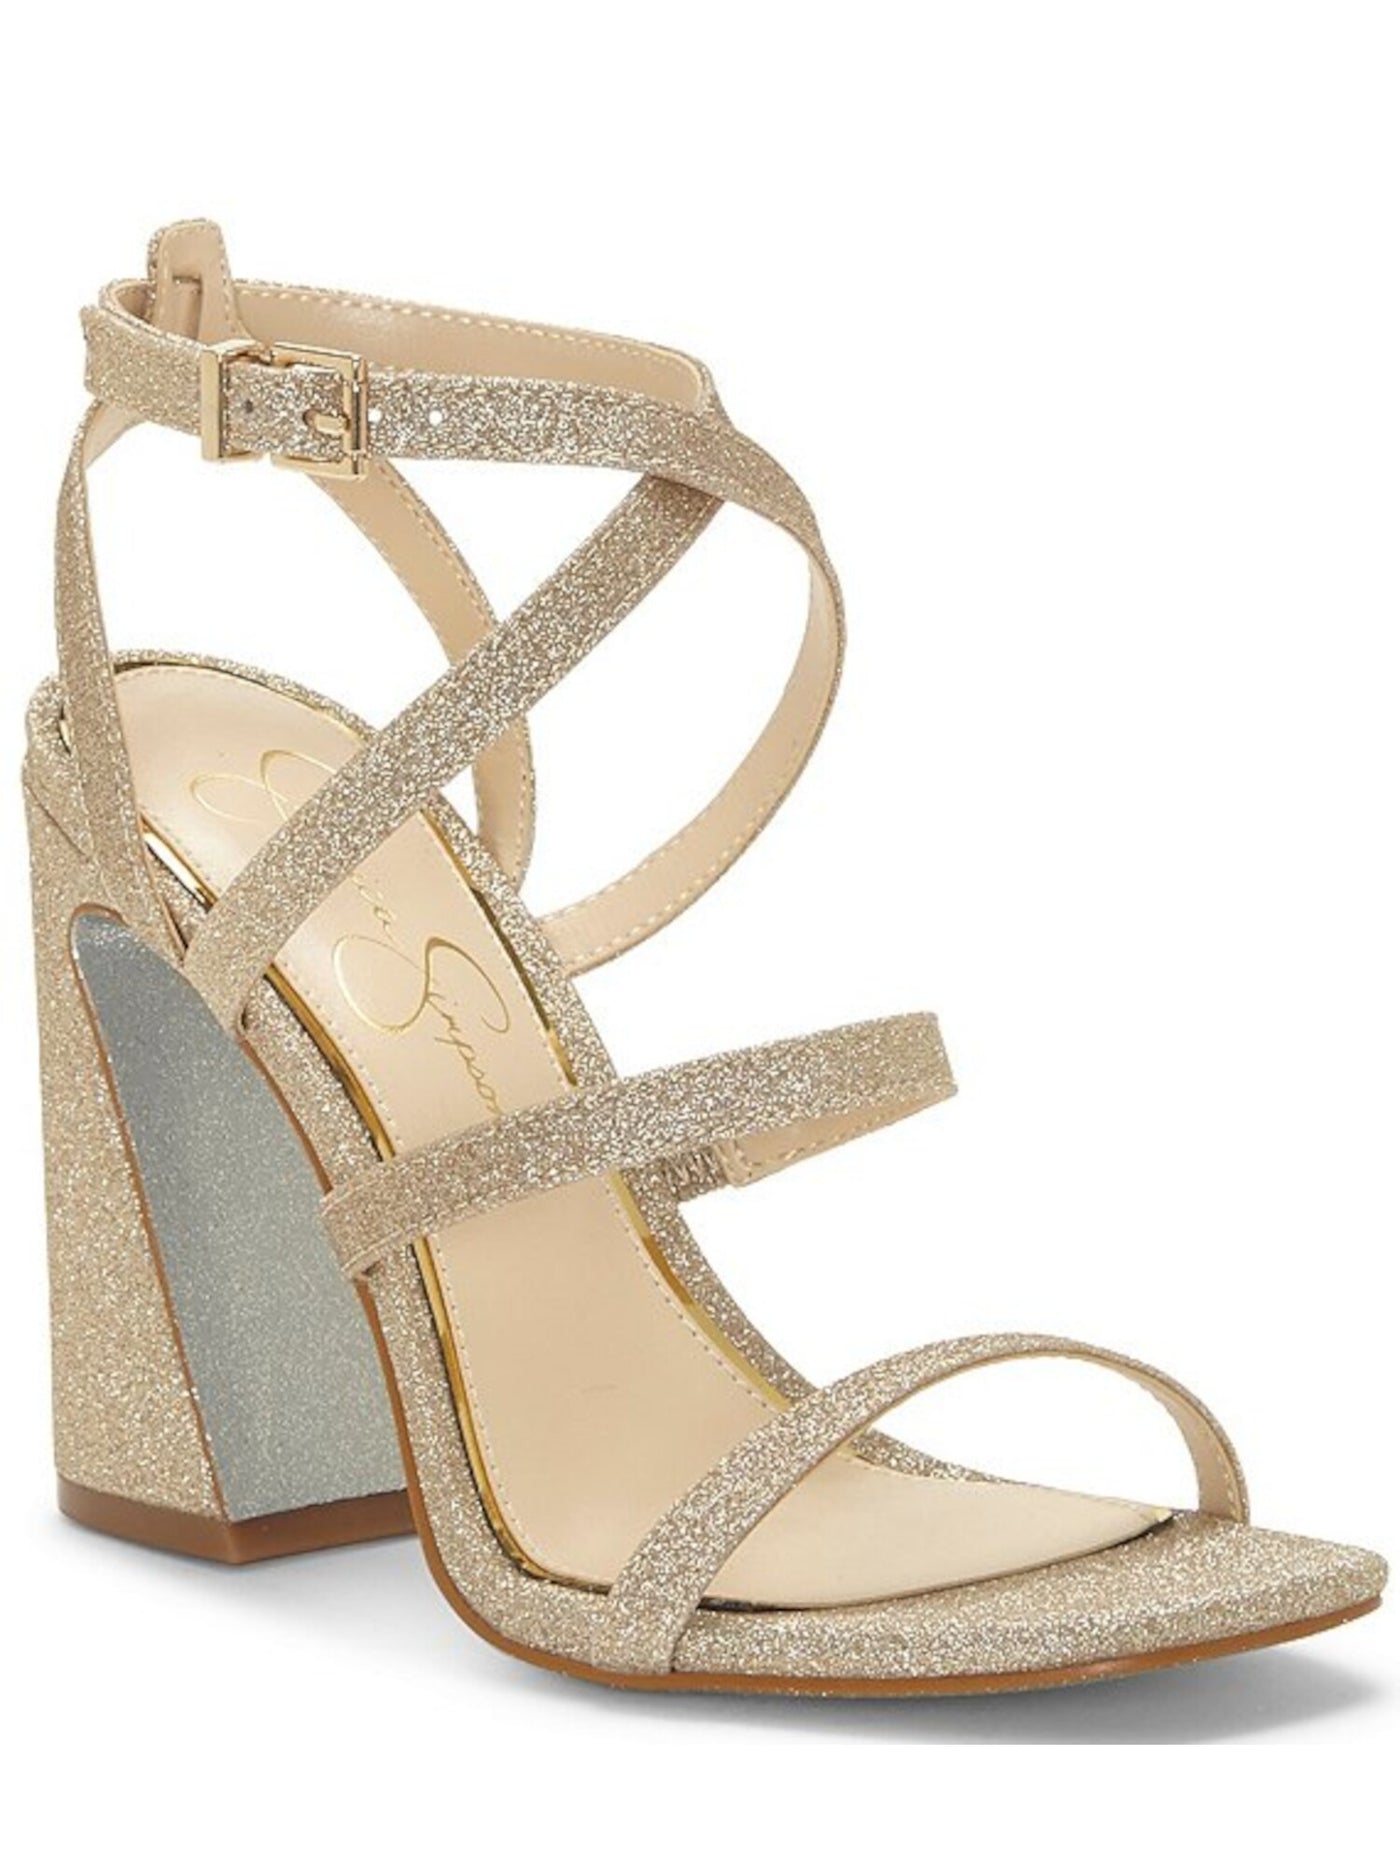 JESSICA SIMPSON Womens Gold Glitter Strappy Open Toe Block Heel Buckle Dress Sandals Shoes 10